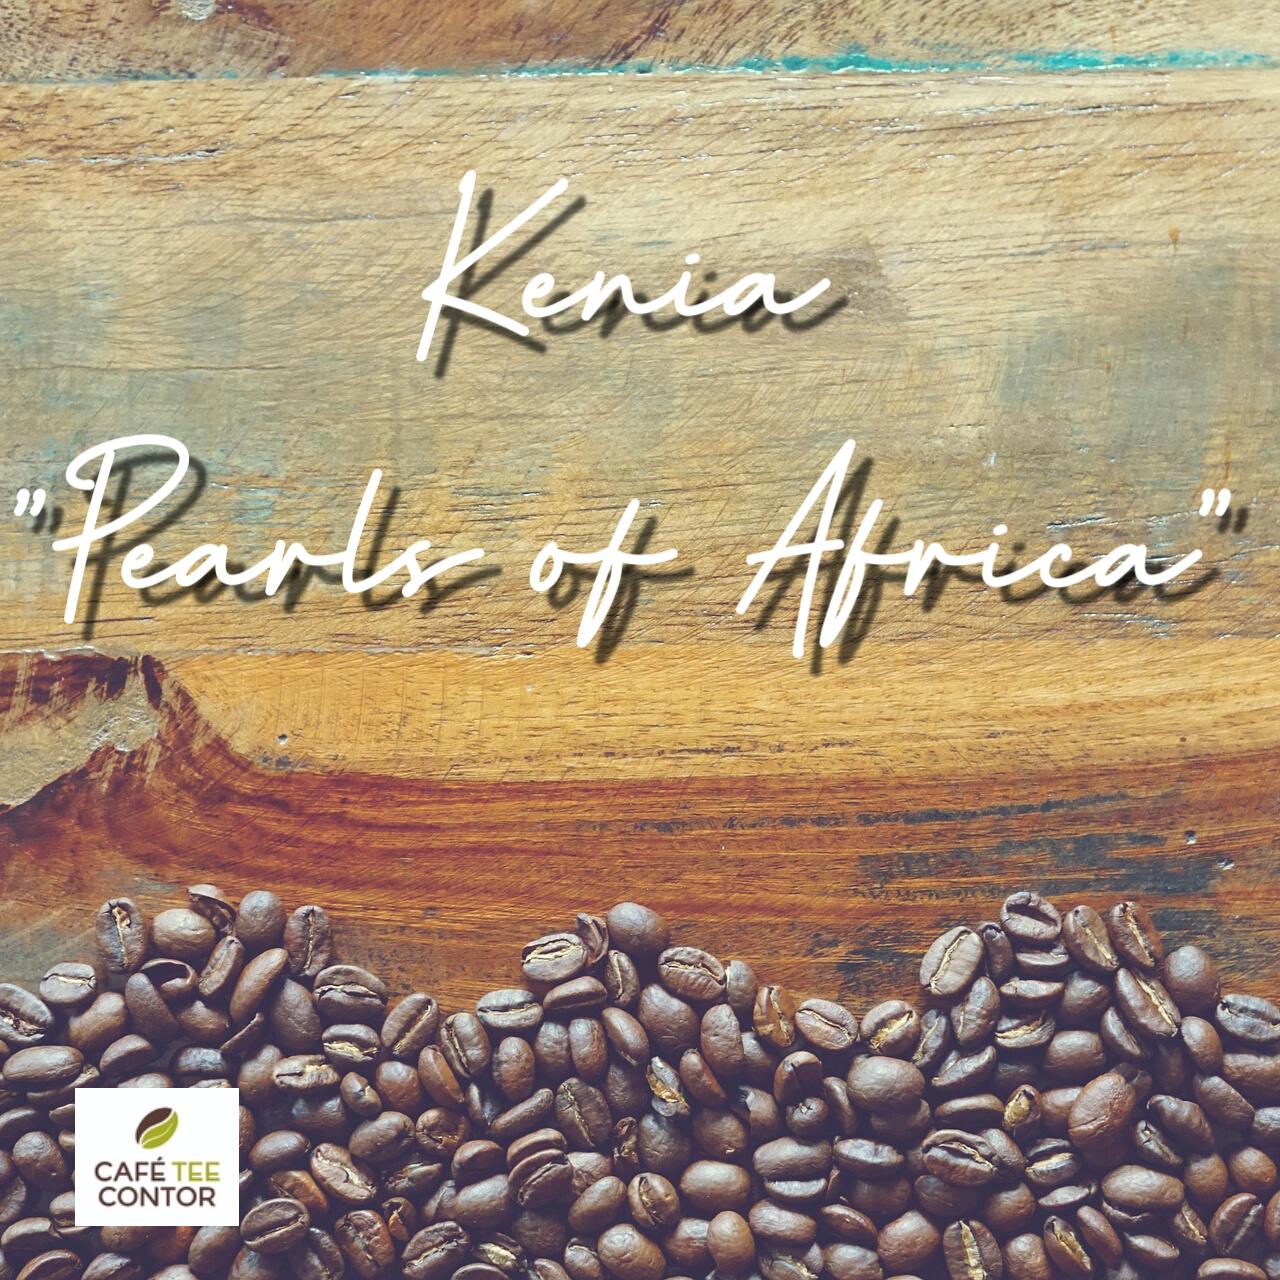 Kaffee Kenia "Pearls of Africa"